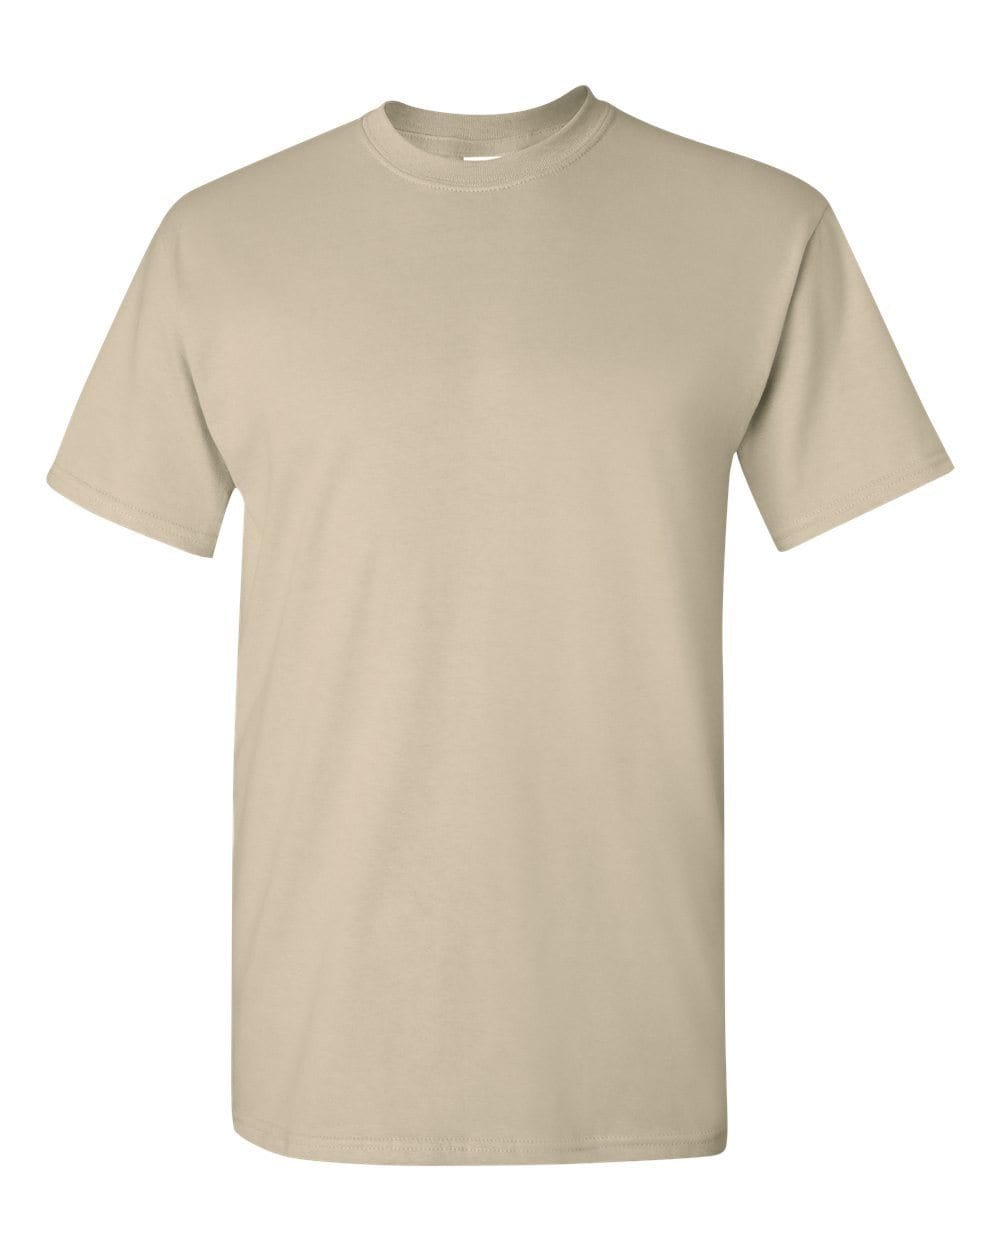 T-Shirts - Veterans Lifeline Embroidered Unisex T-Shirt